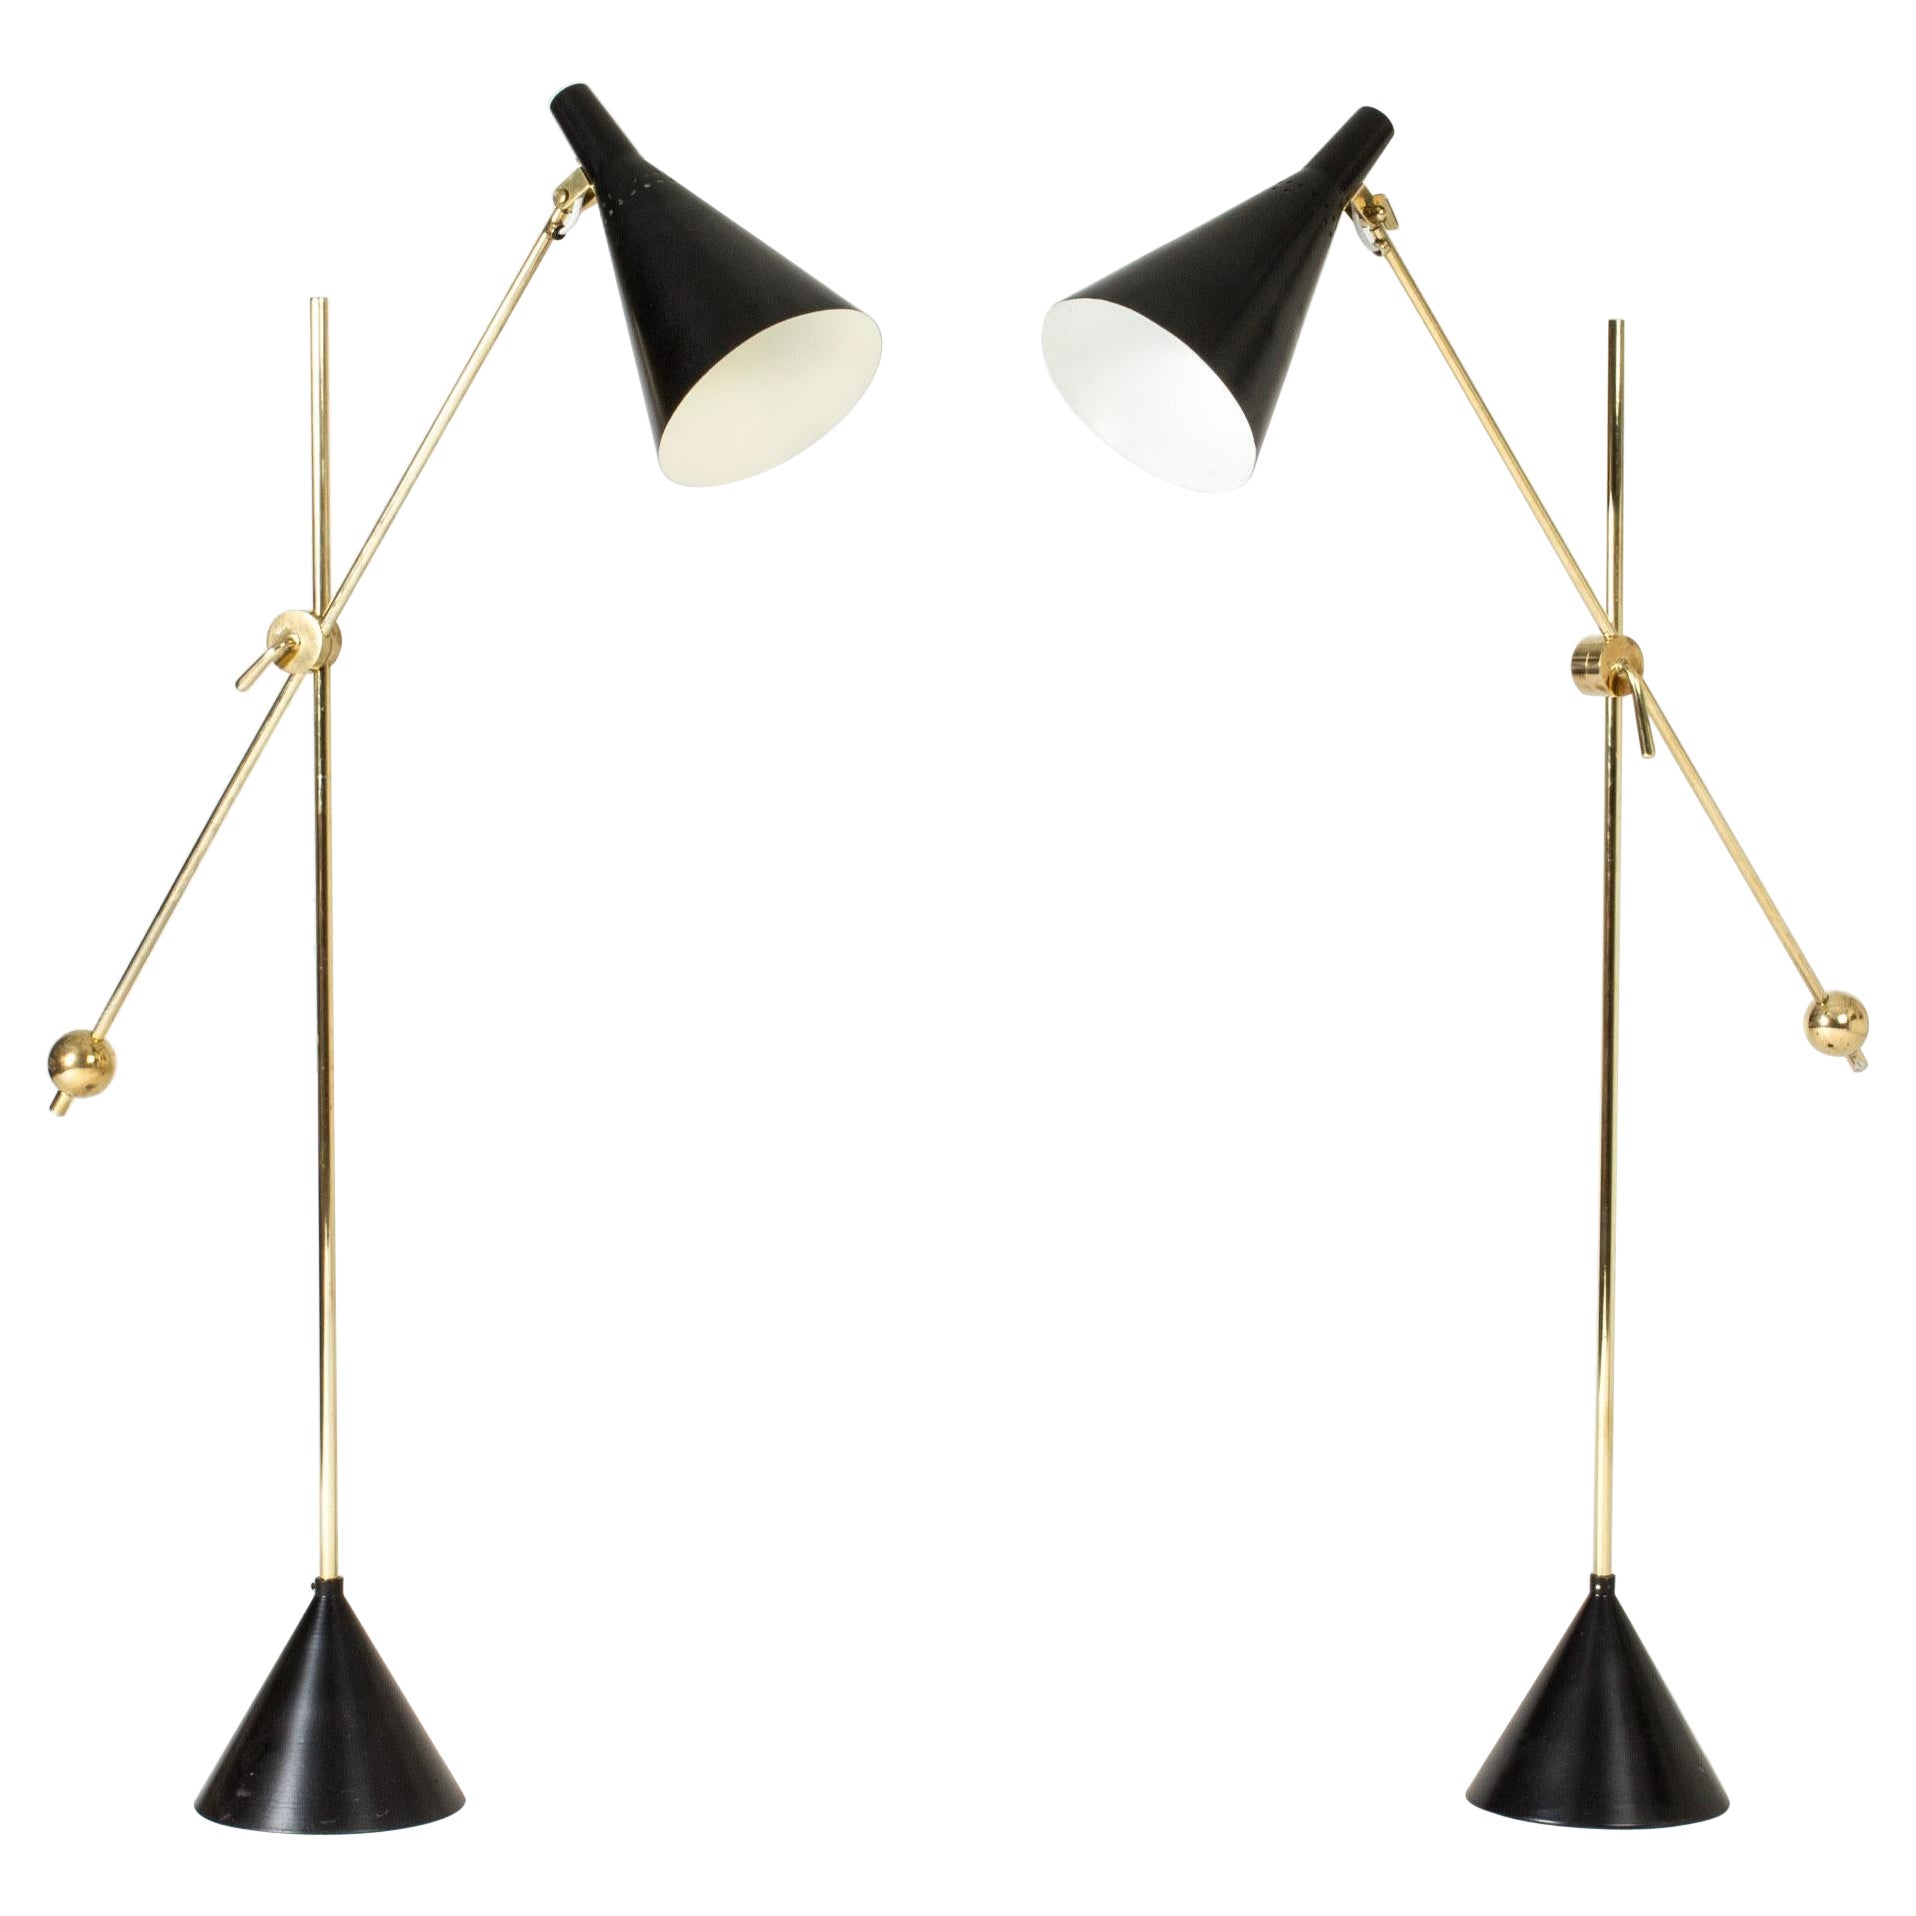 Pair of Midcentury Brass Floor Lamps by Tapio Wirkkala for Idman Oy